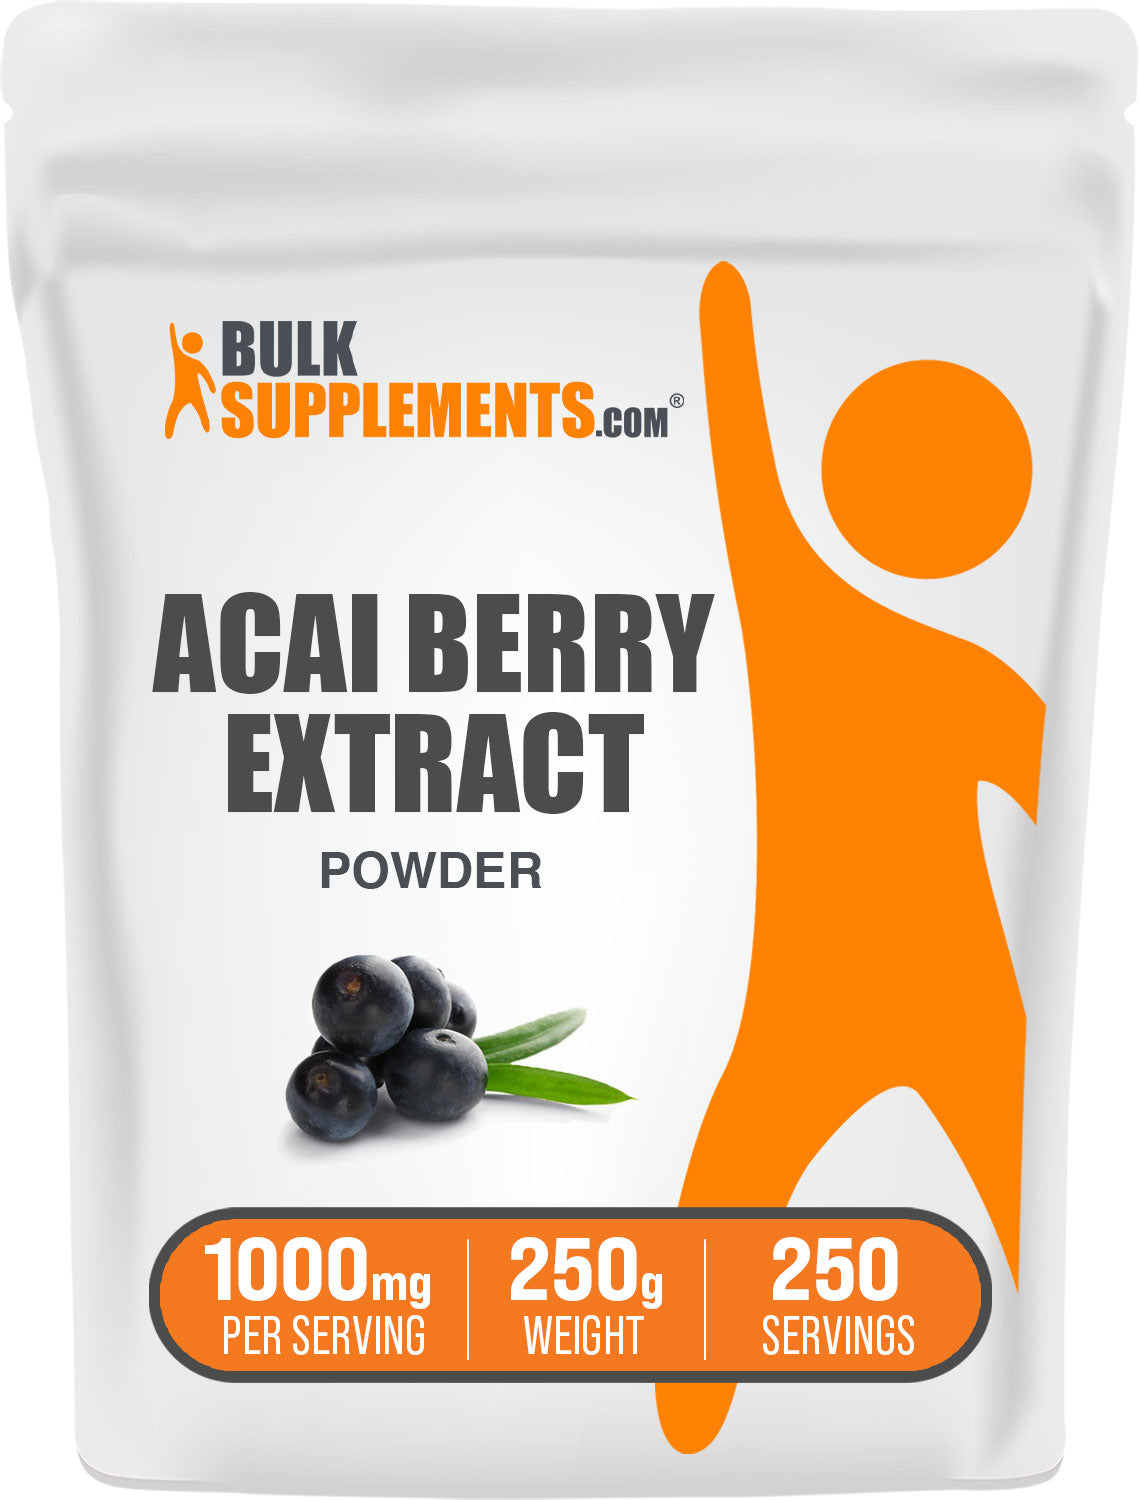 BulkSupplements.com Acai Berry Extract Powder 250g Bag